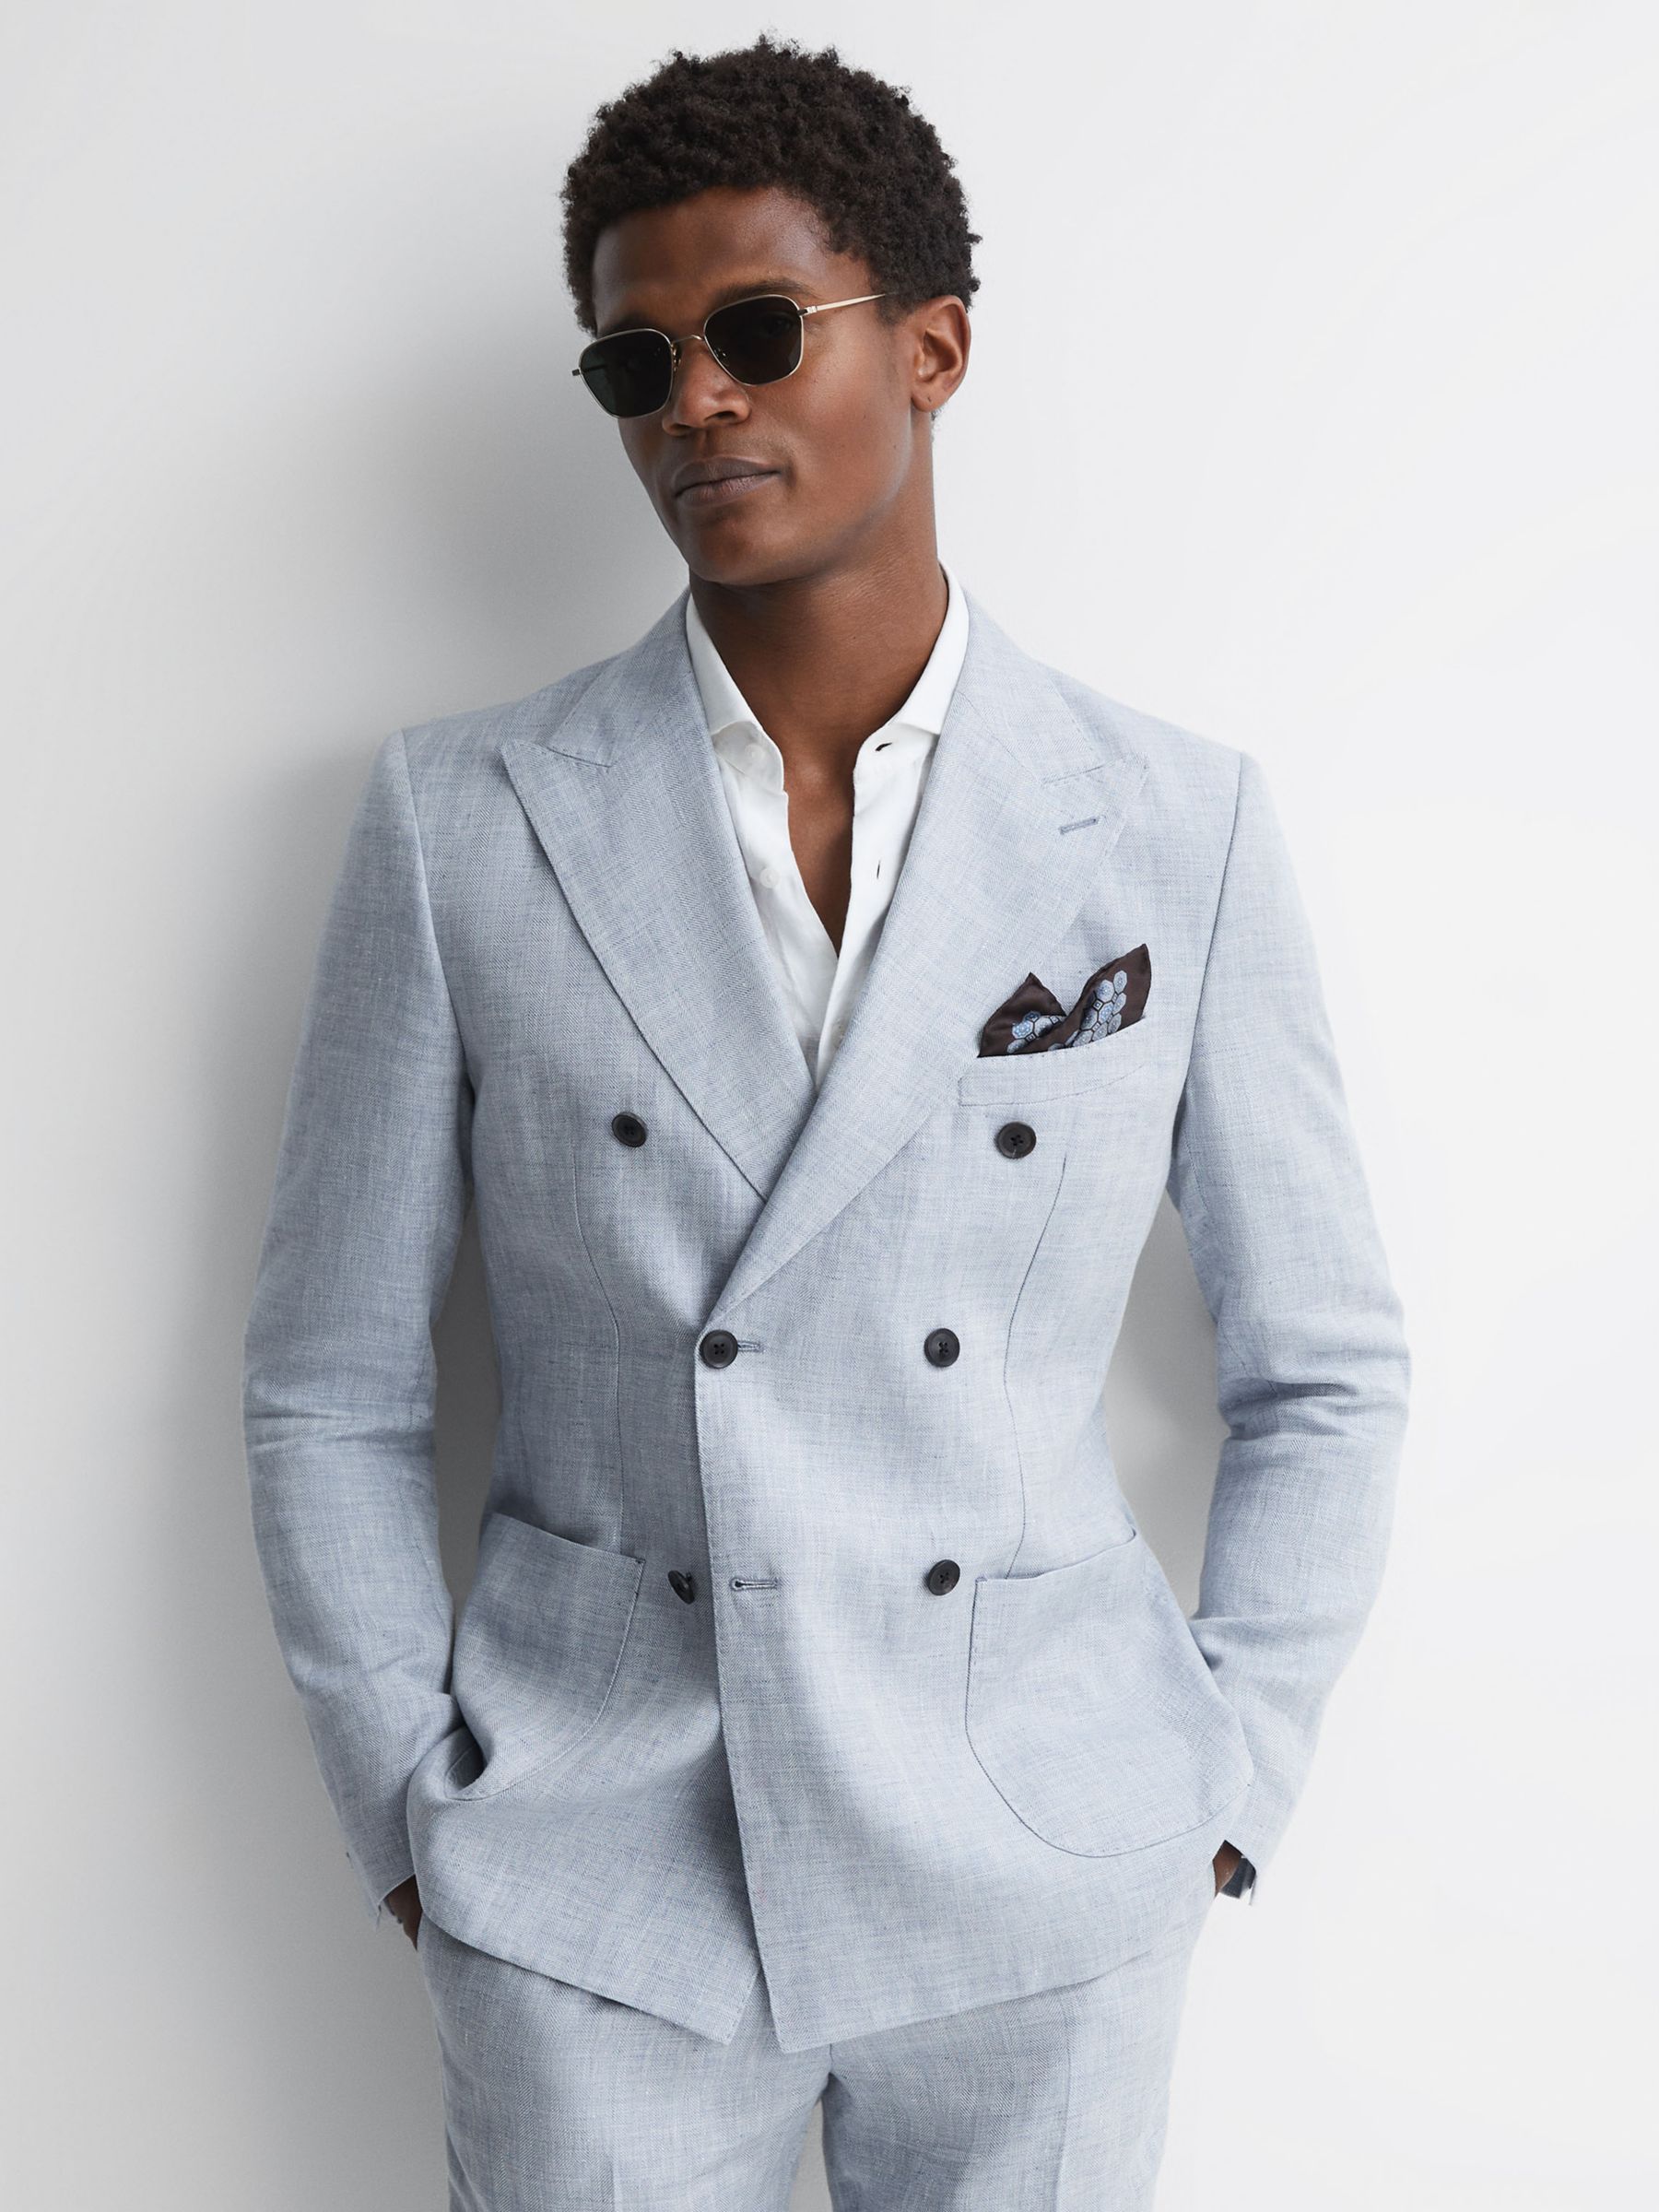 Reiss Lagoon Peak Linen Suit Blazer, Soft Blue, 36